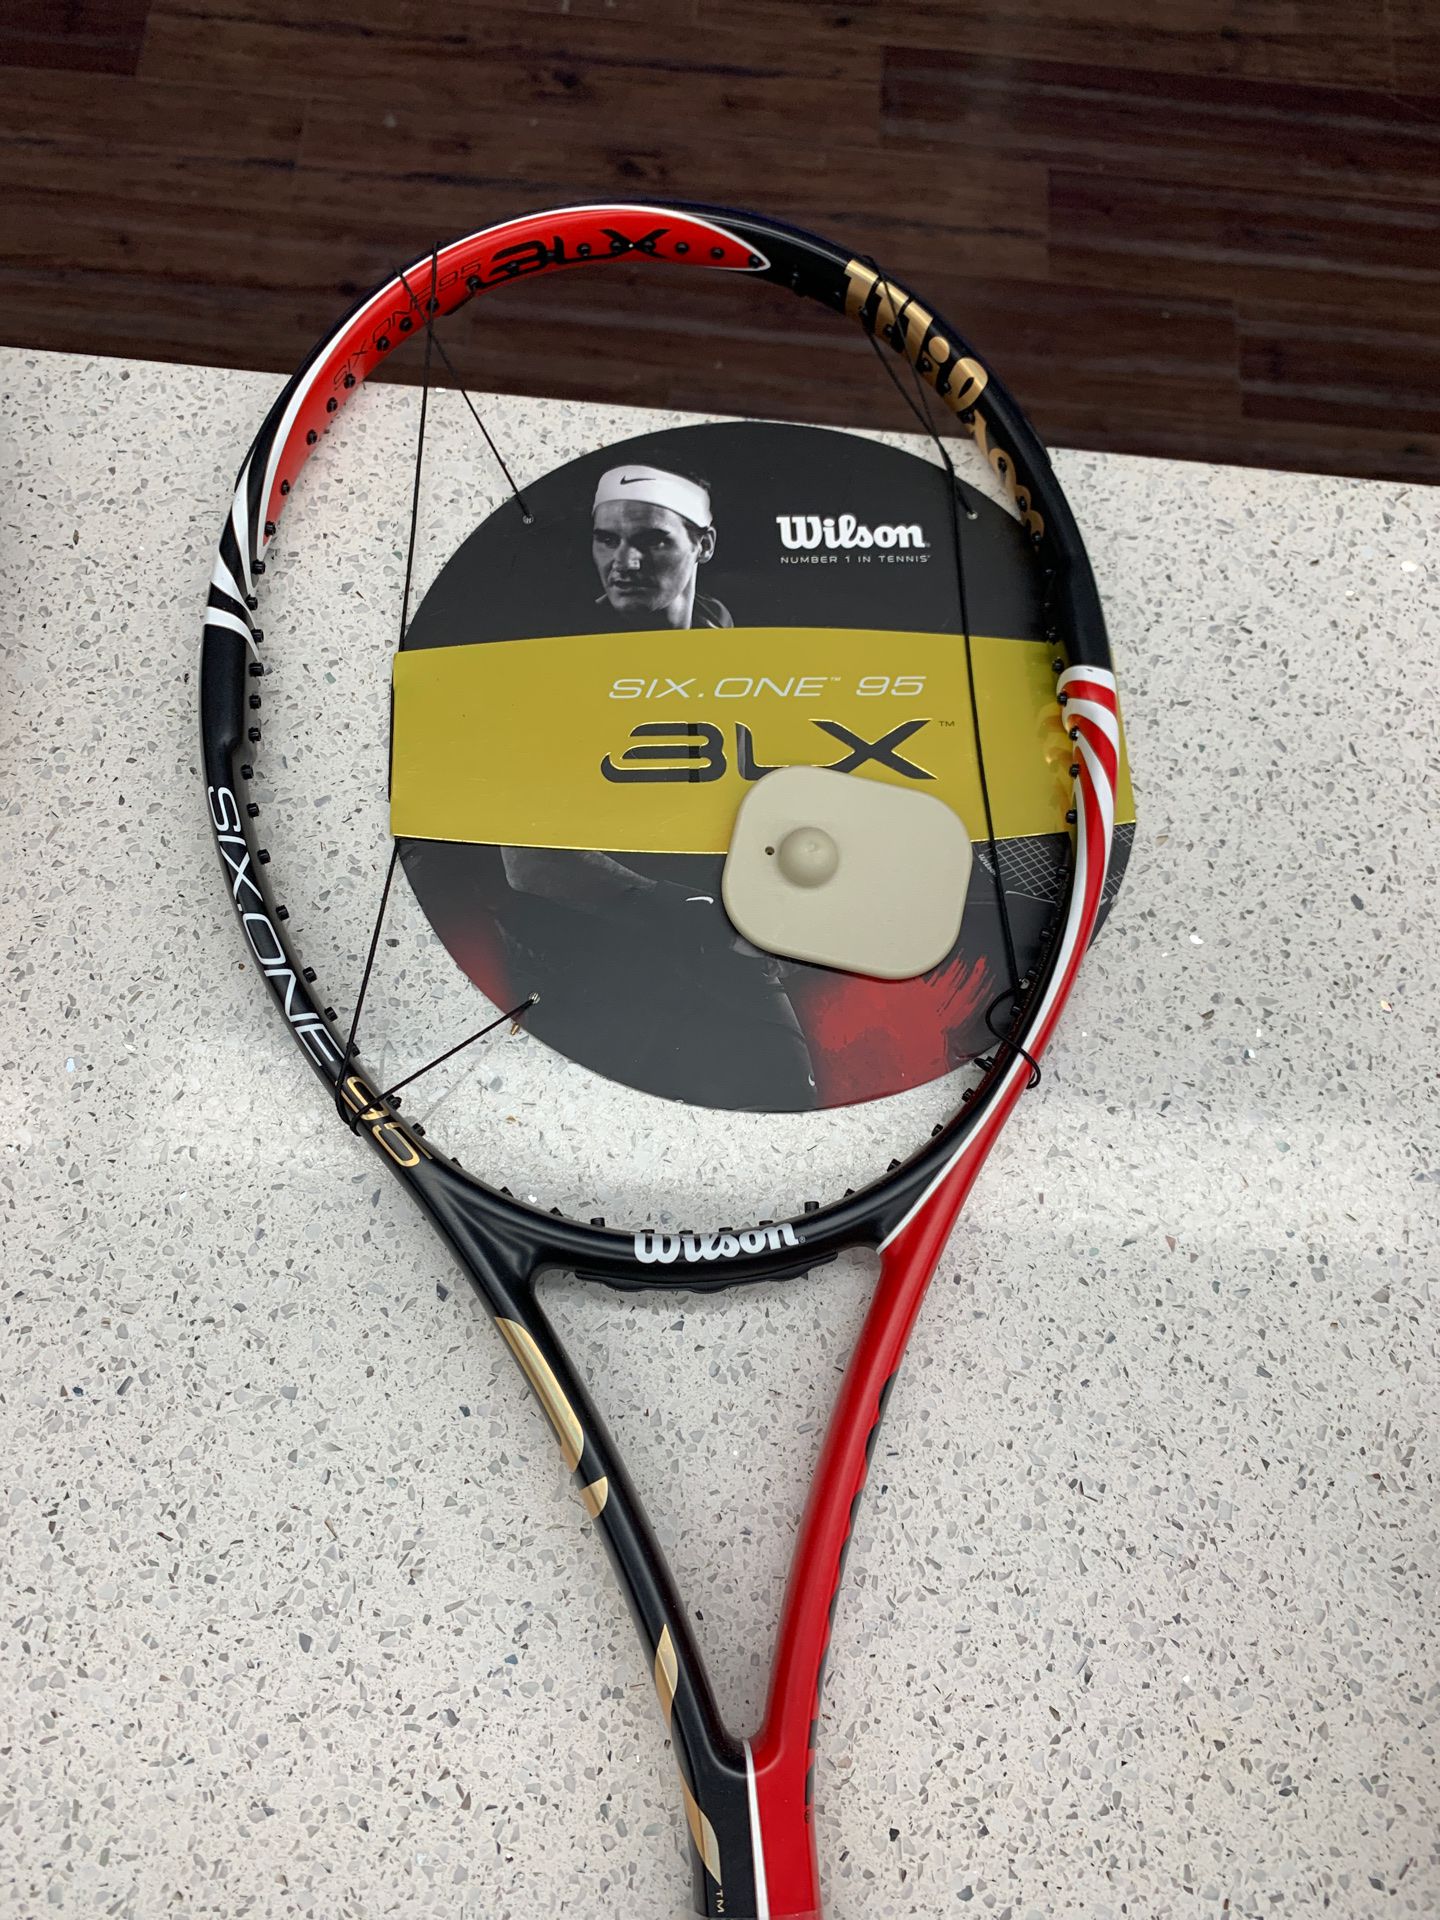 Wilson tennis racket weight 10.2 oz